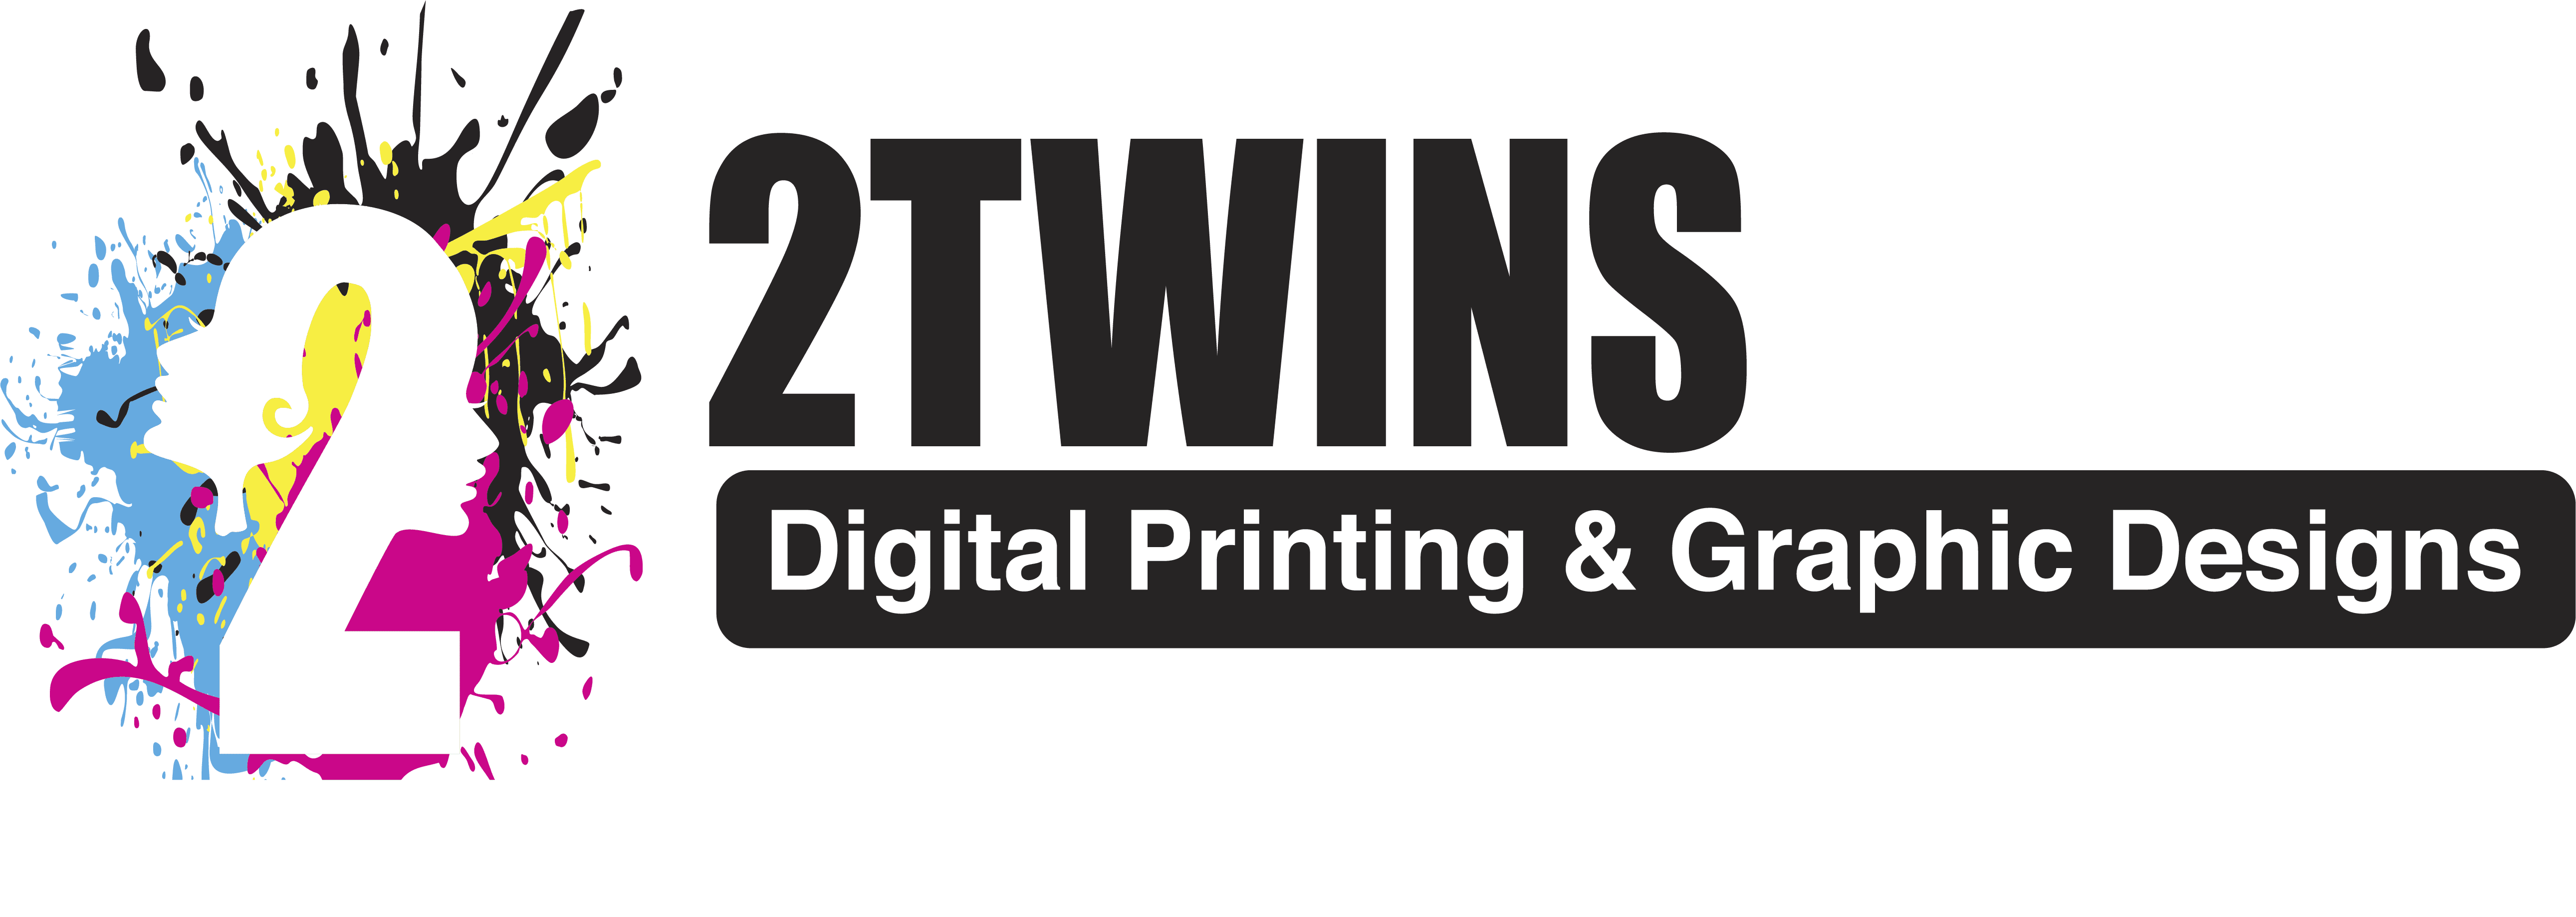 2TWINS Digital Printing & Graphic Designs